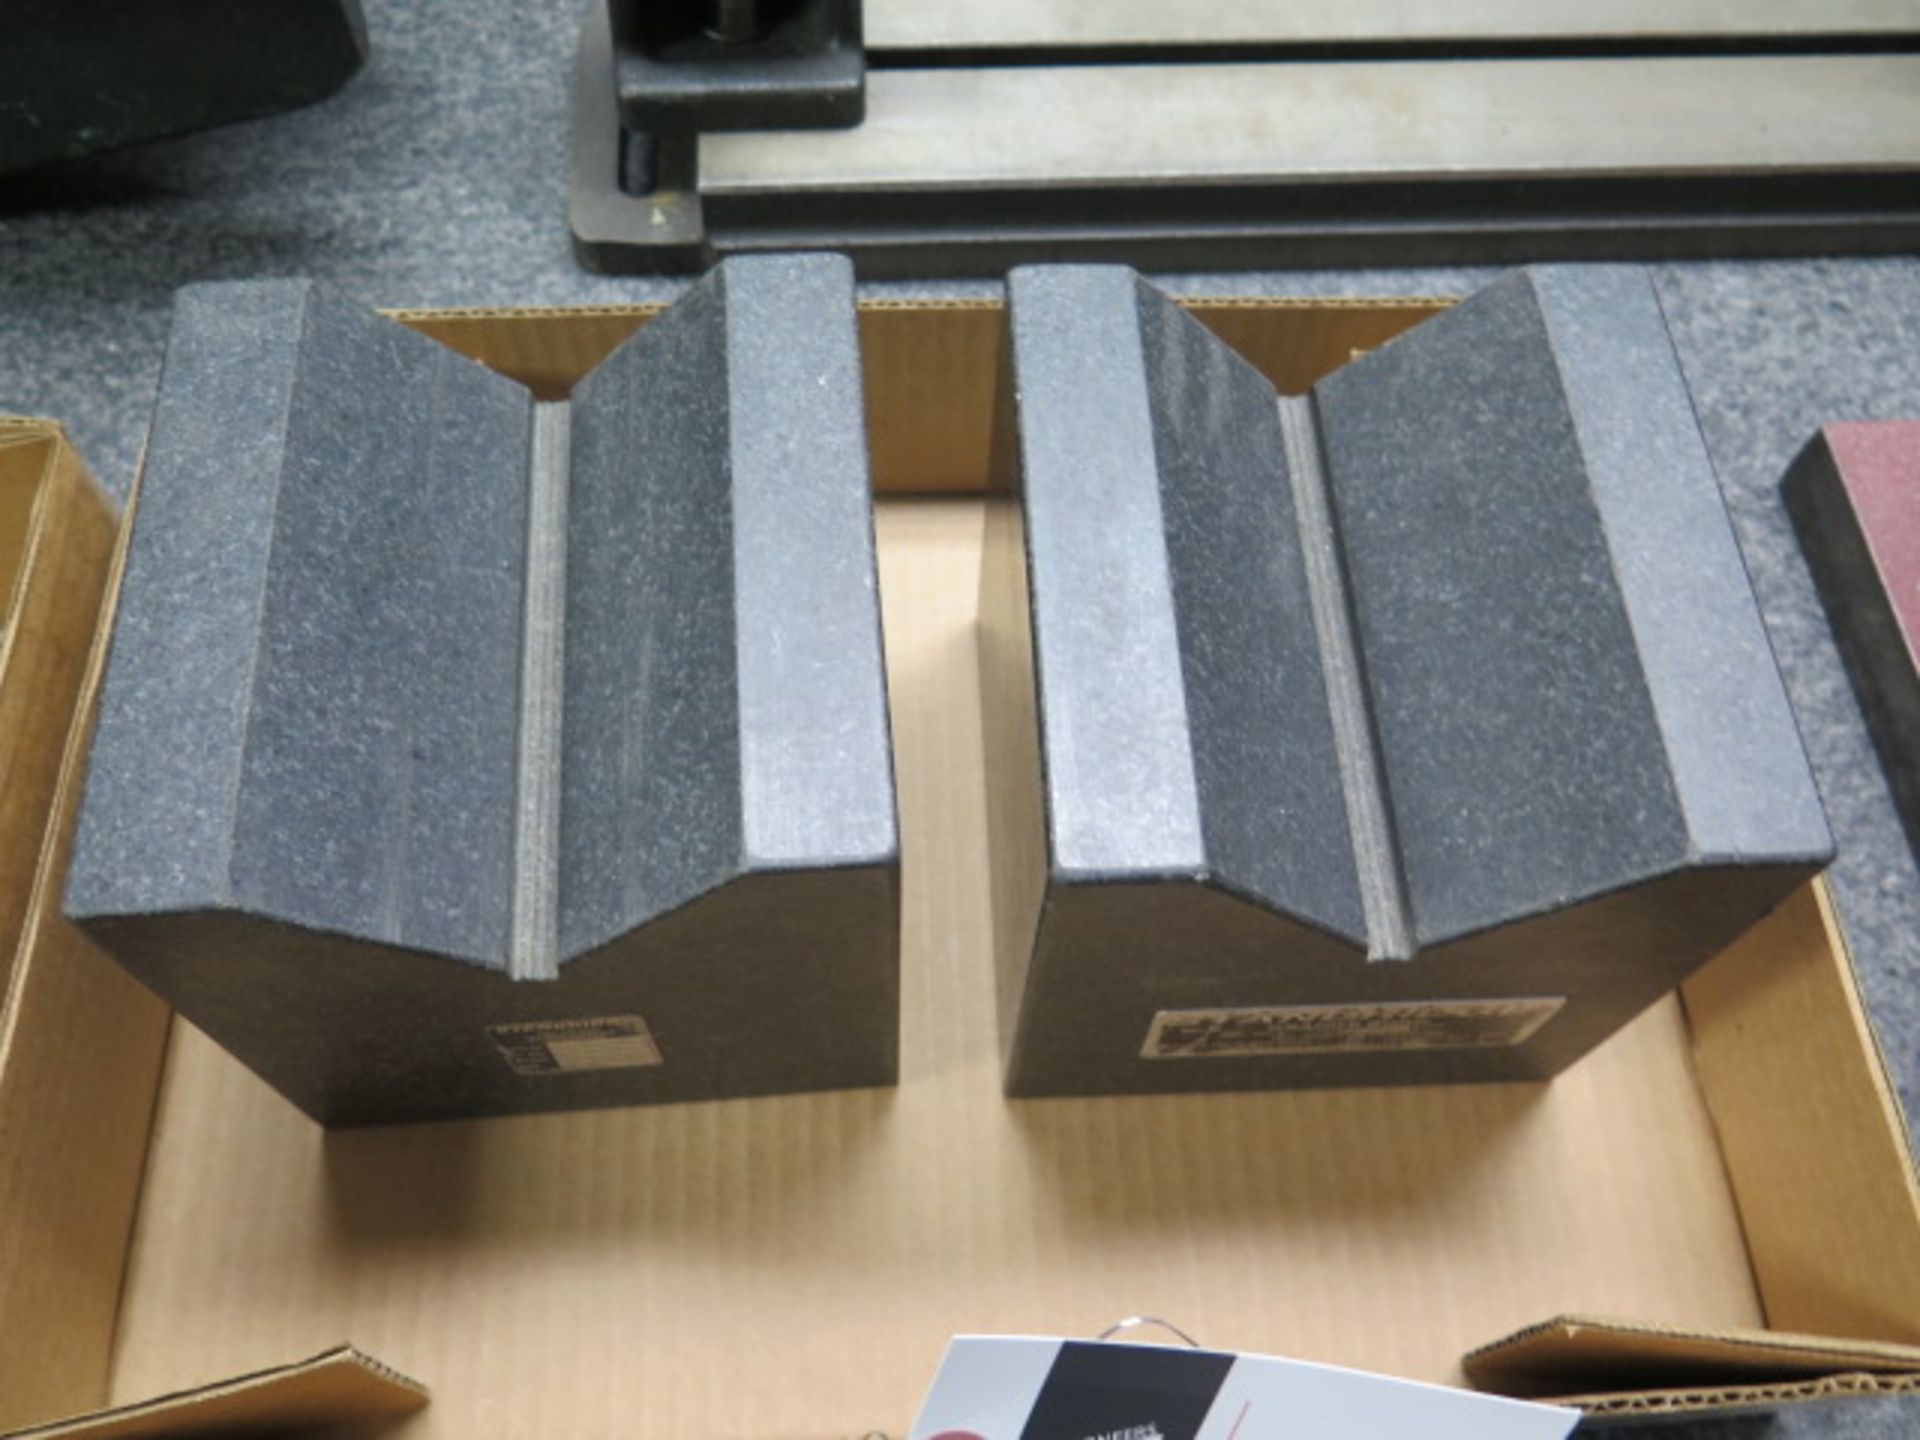 Standridge 6” x 6” x 6” Granite V-Blocks (2) (SOLD AS-IS - NO WARRANTY) - Image 2 of 6